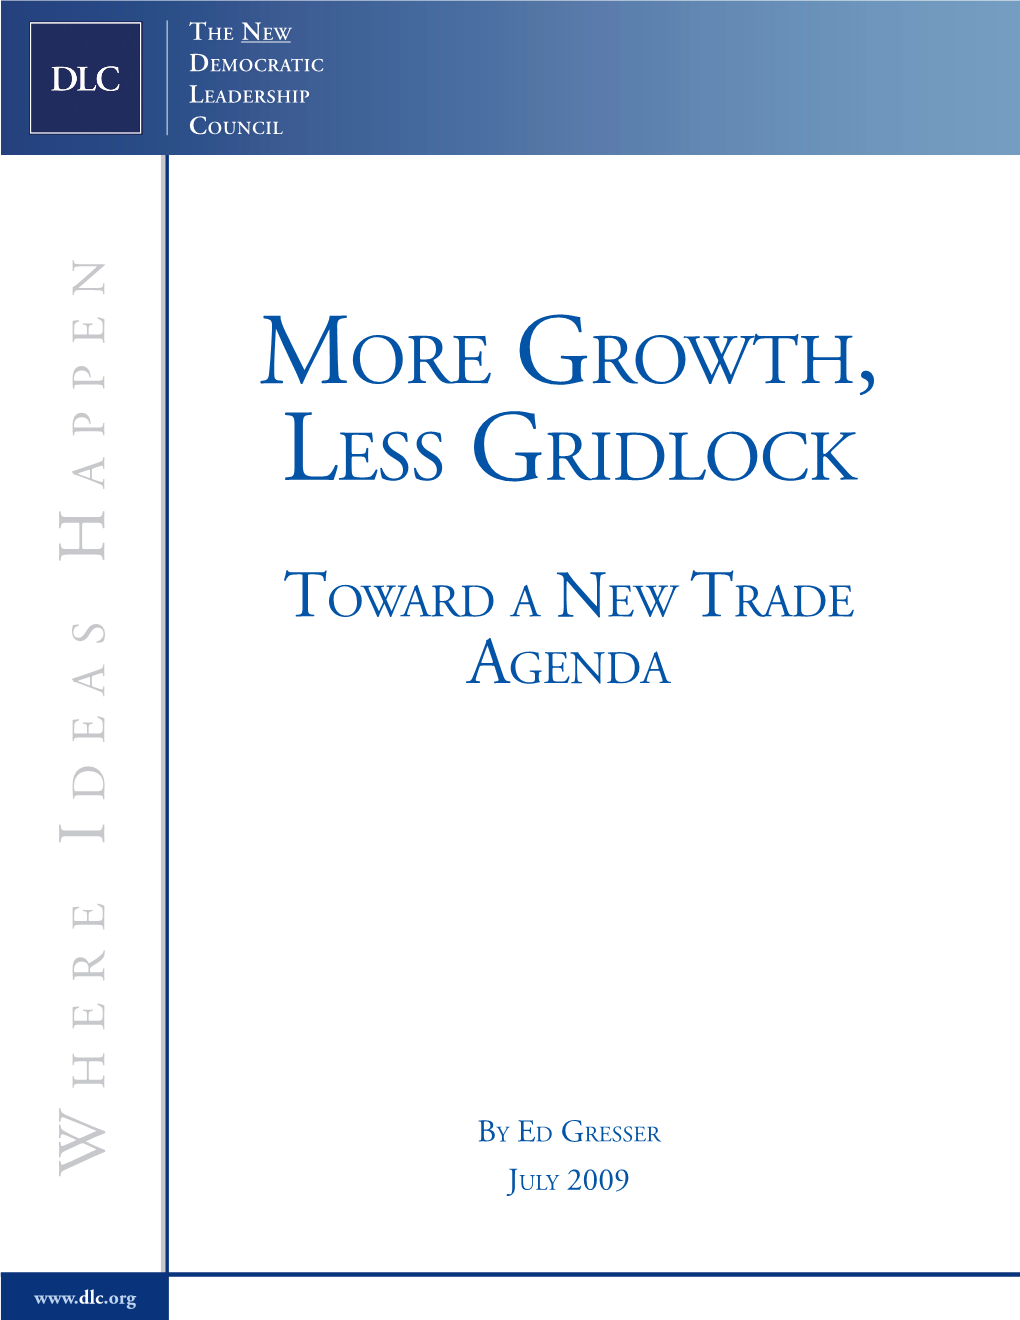 Growth, Less Gridlock